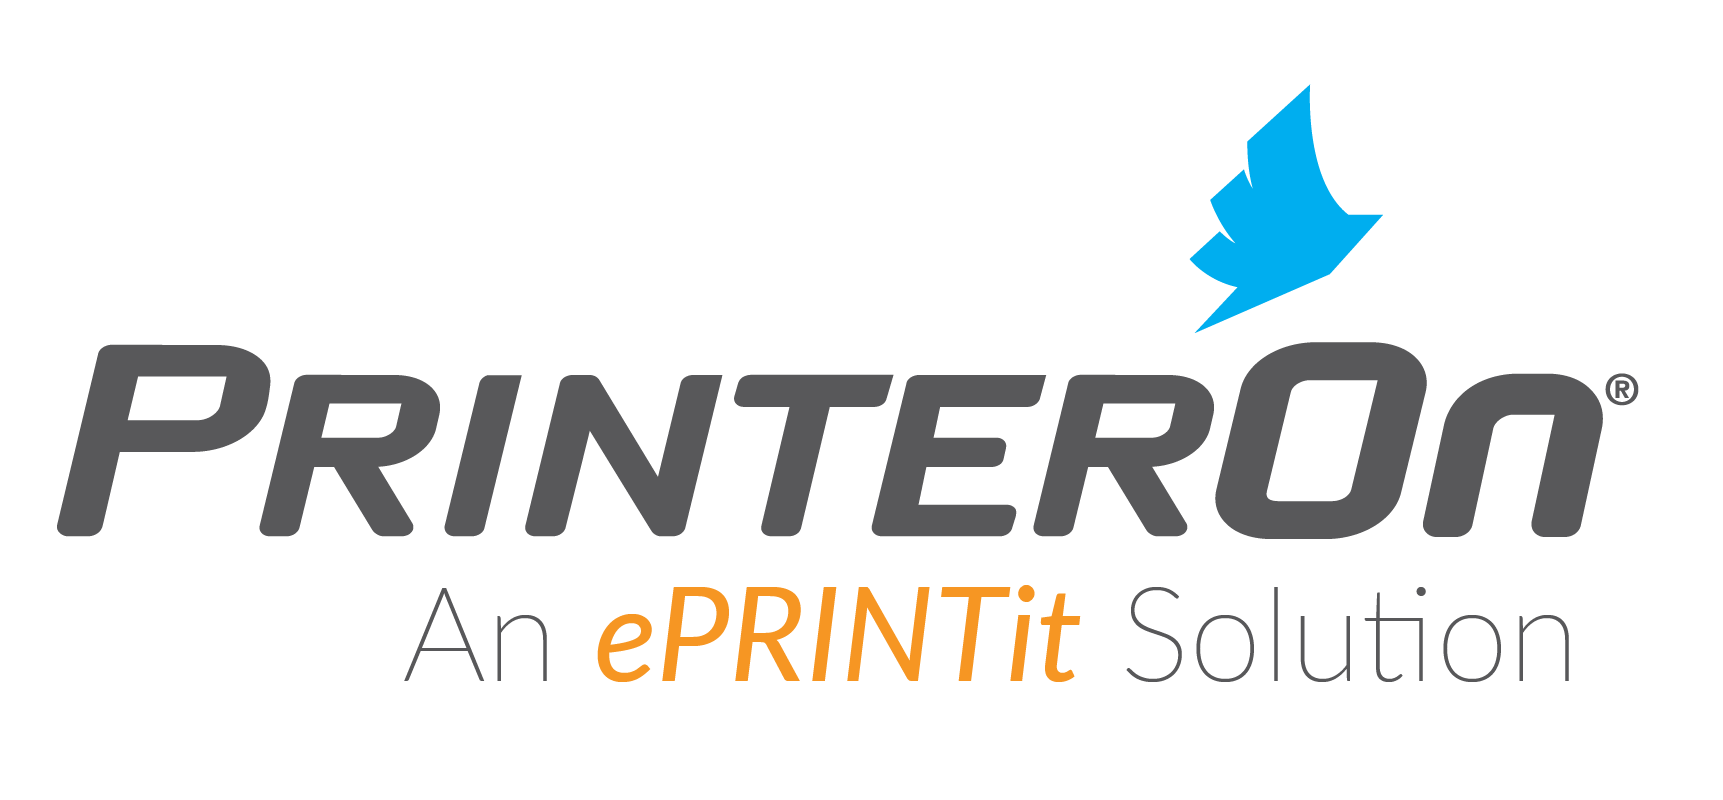 Secure Printing Solutions in the Cloud Era - Printeron